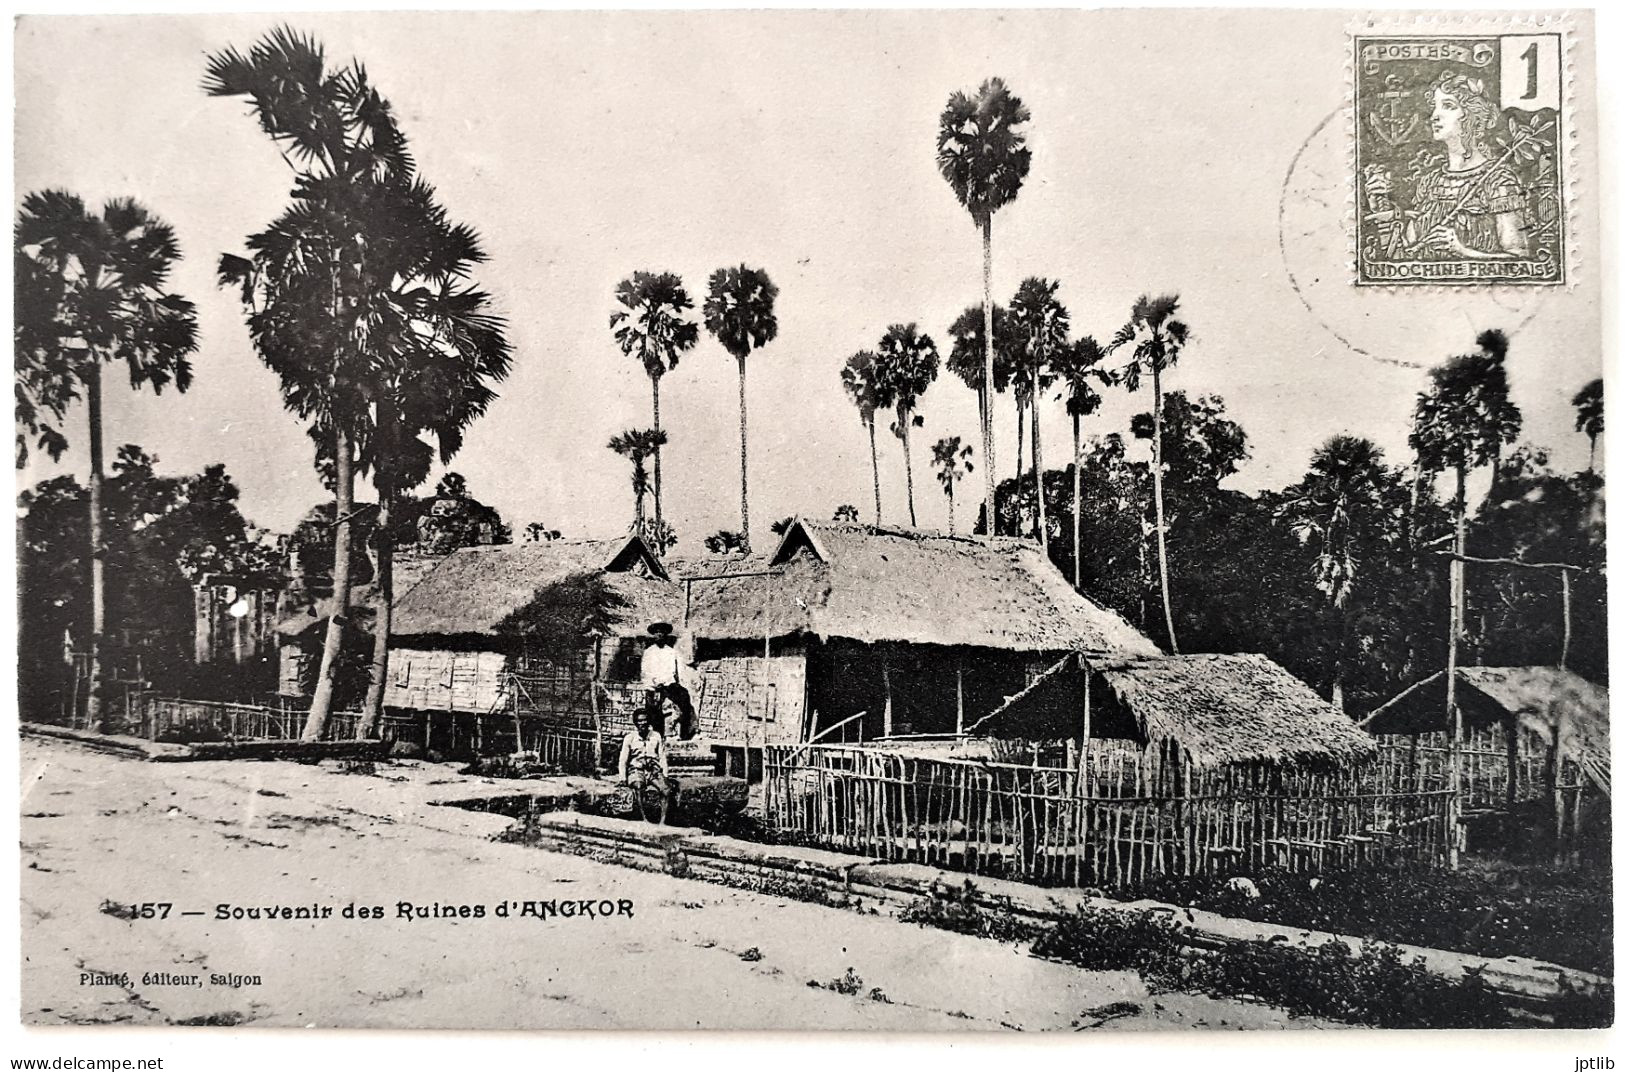 CPA Carte Postale / Indo-Chine, Indochine, Cambodge / Planté, éditeur - 157 / Souvenir Des Ruines D'Angkor. - Cambodia